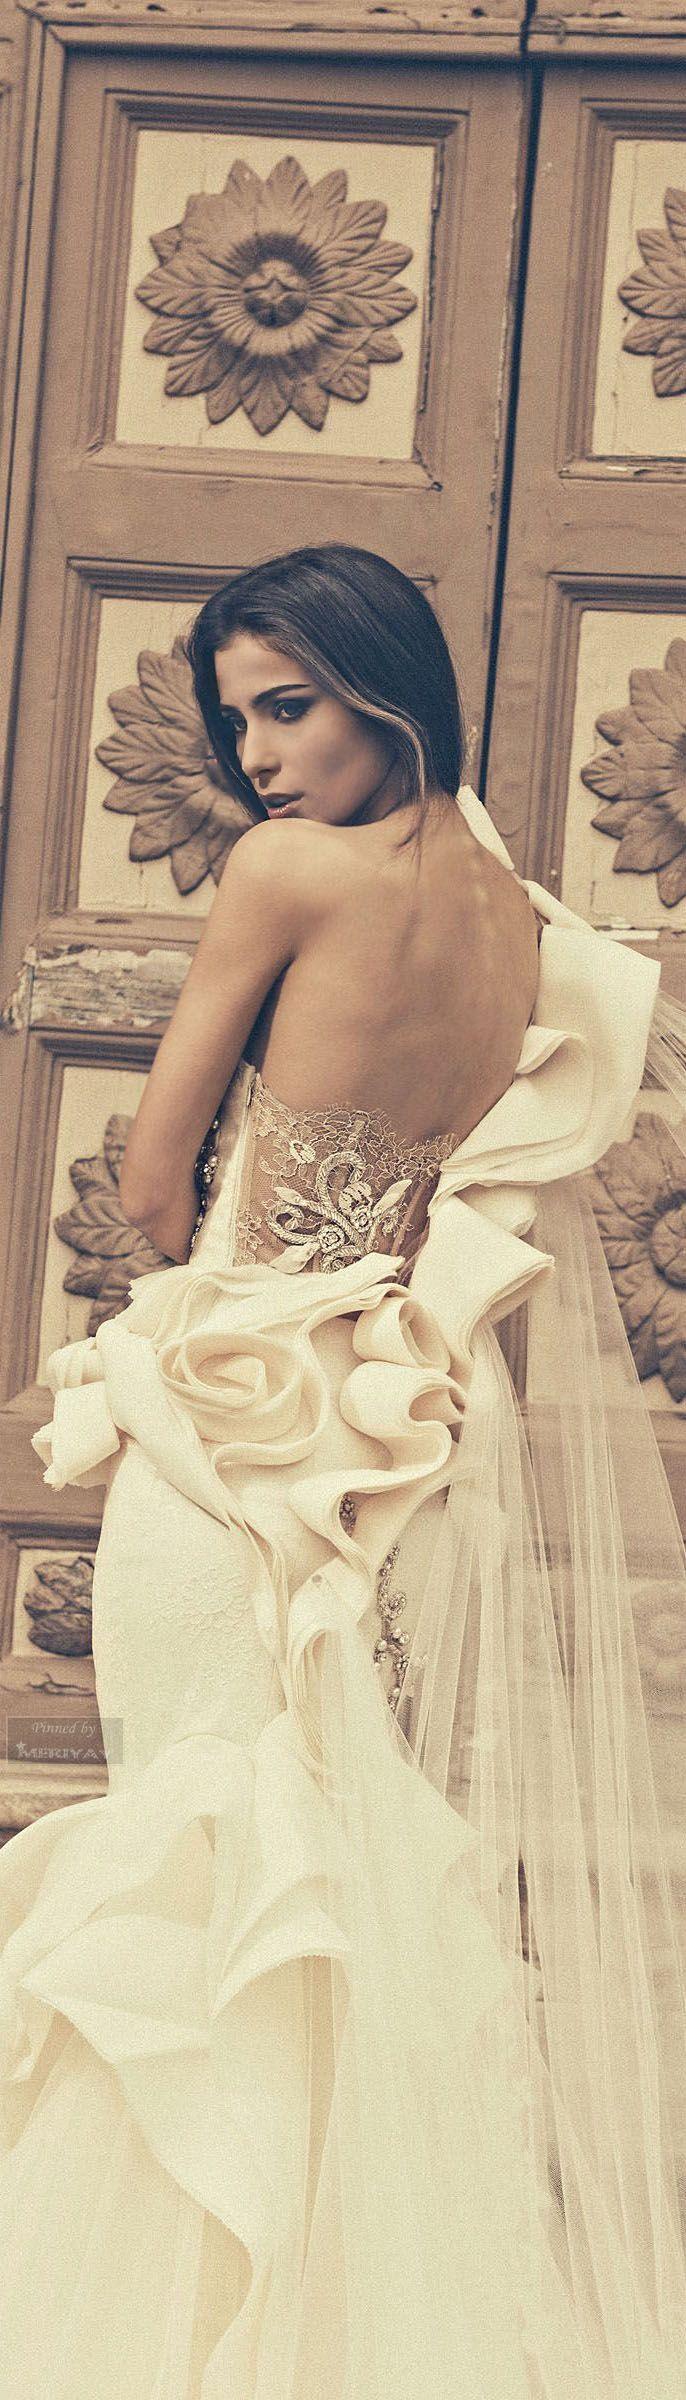 Mariage - One Shoulder Strap Wedding Dress Inspiration